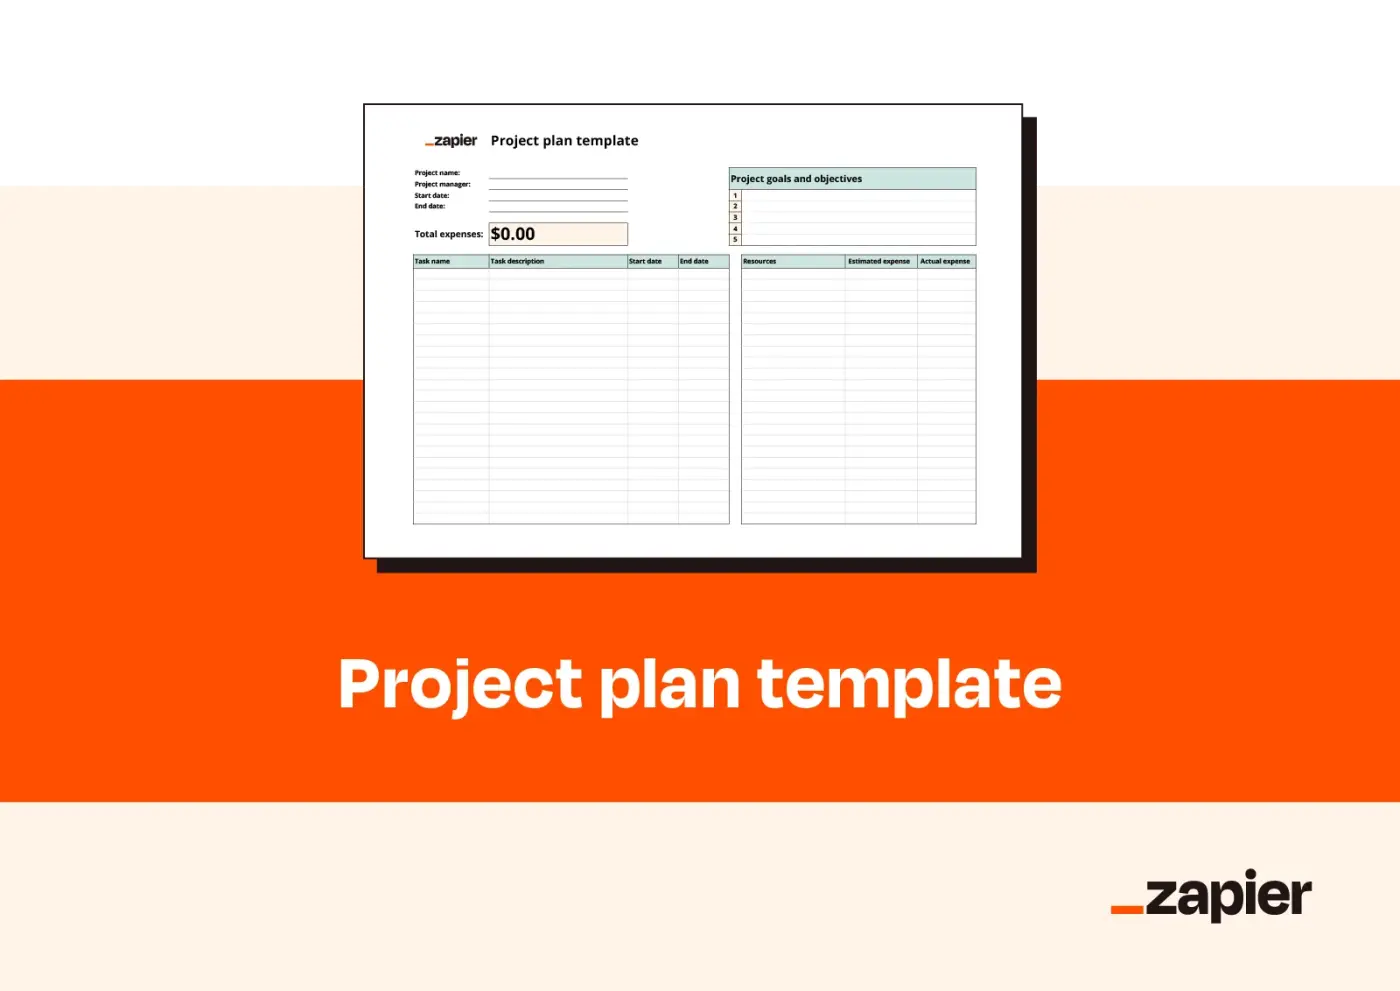 Mockup showcasing Zapier's project plan template